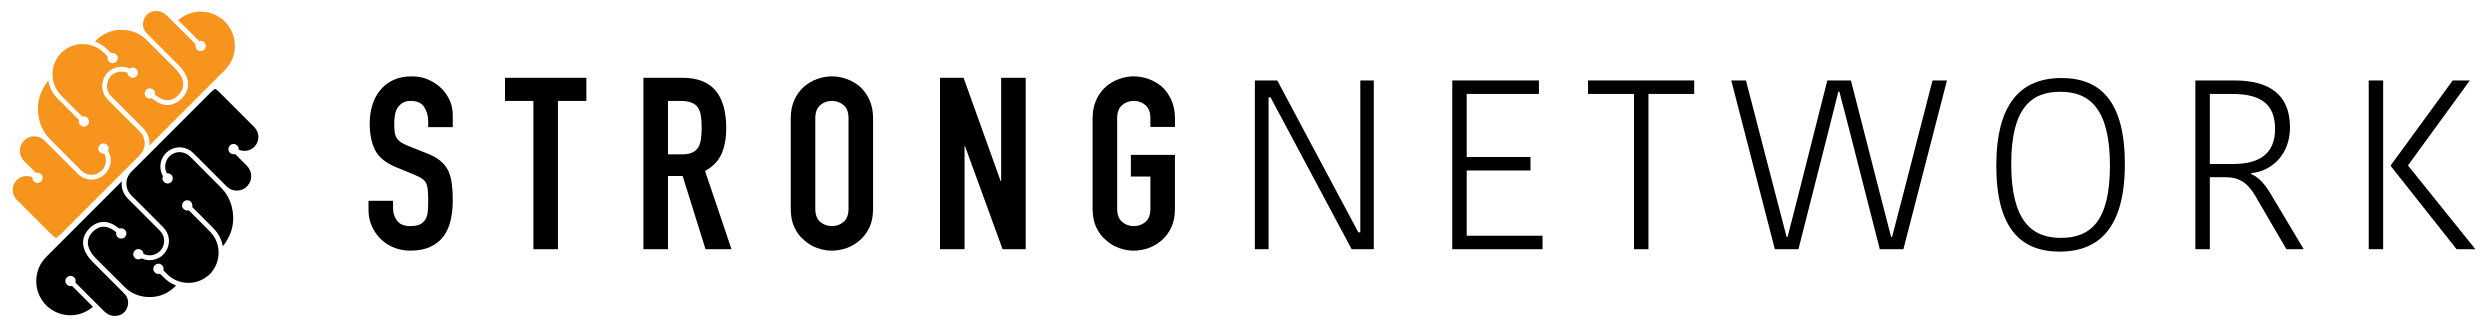 Strong_network_logo